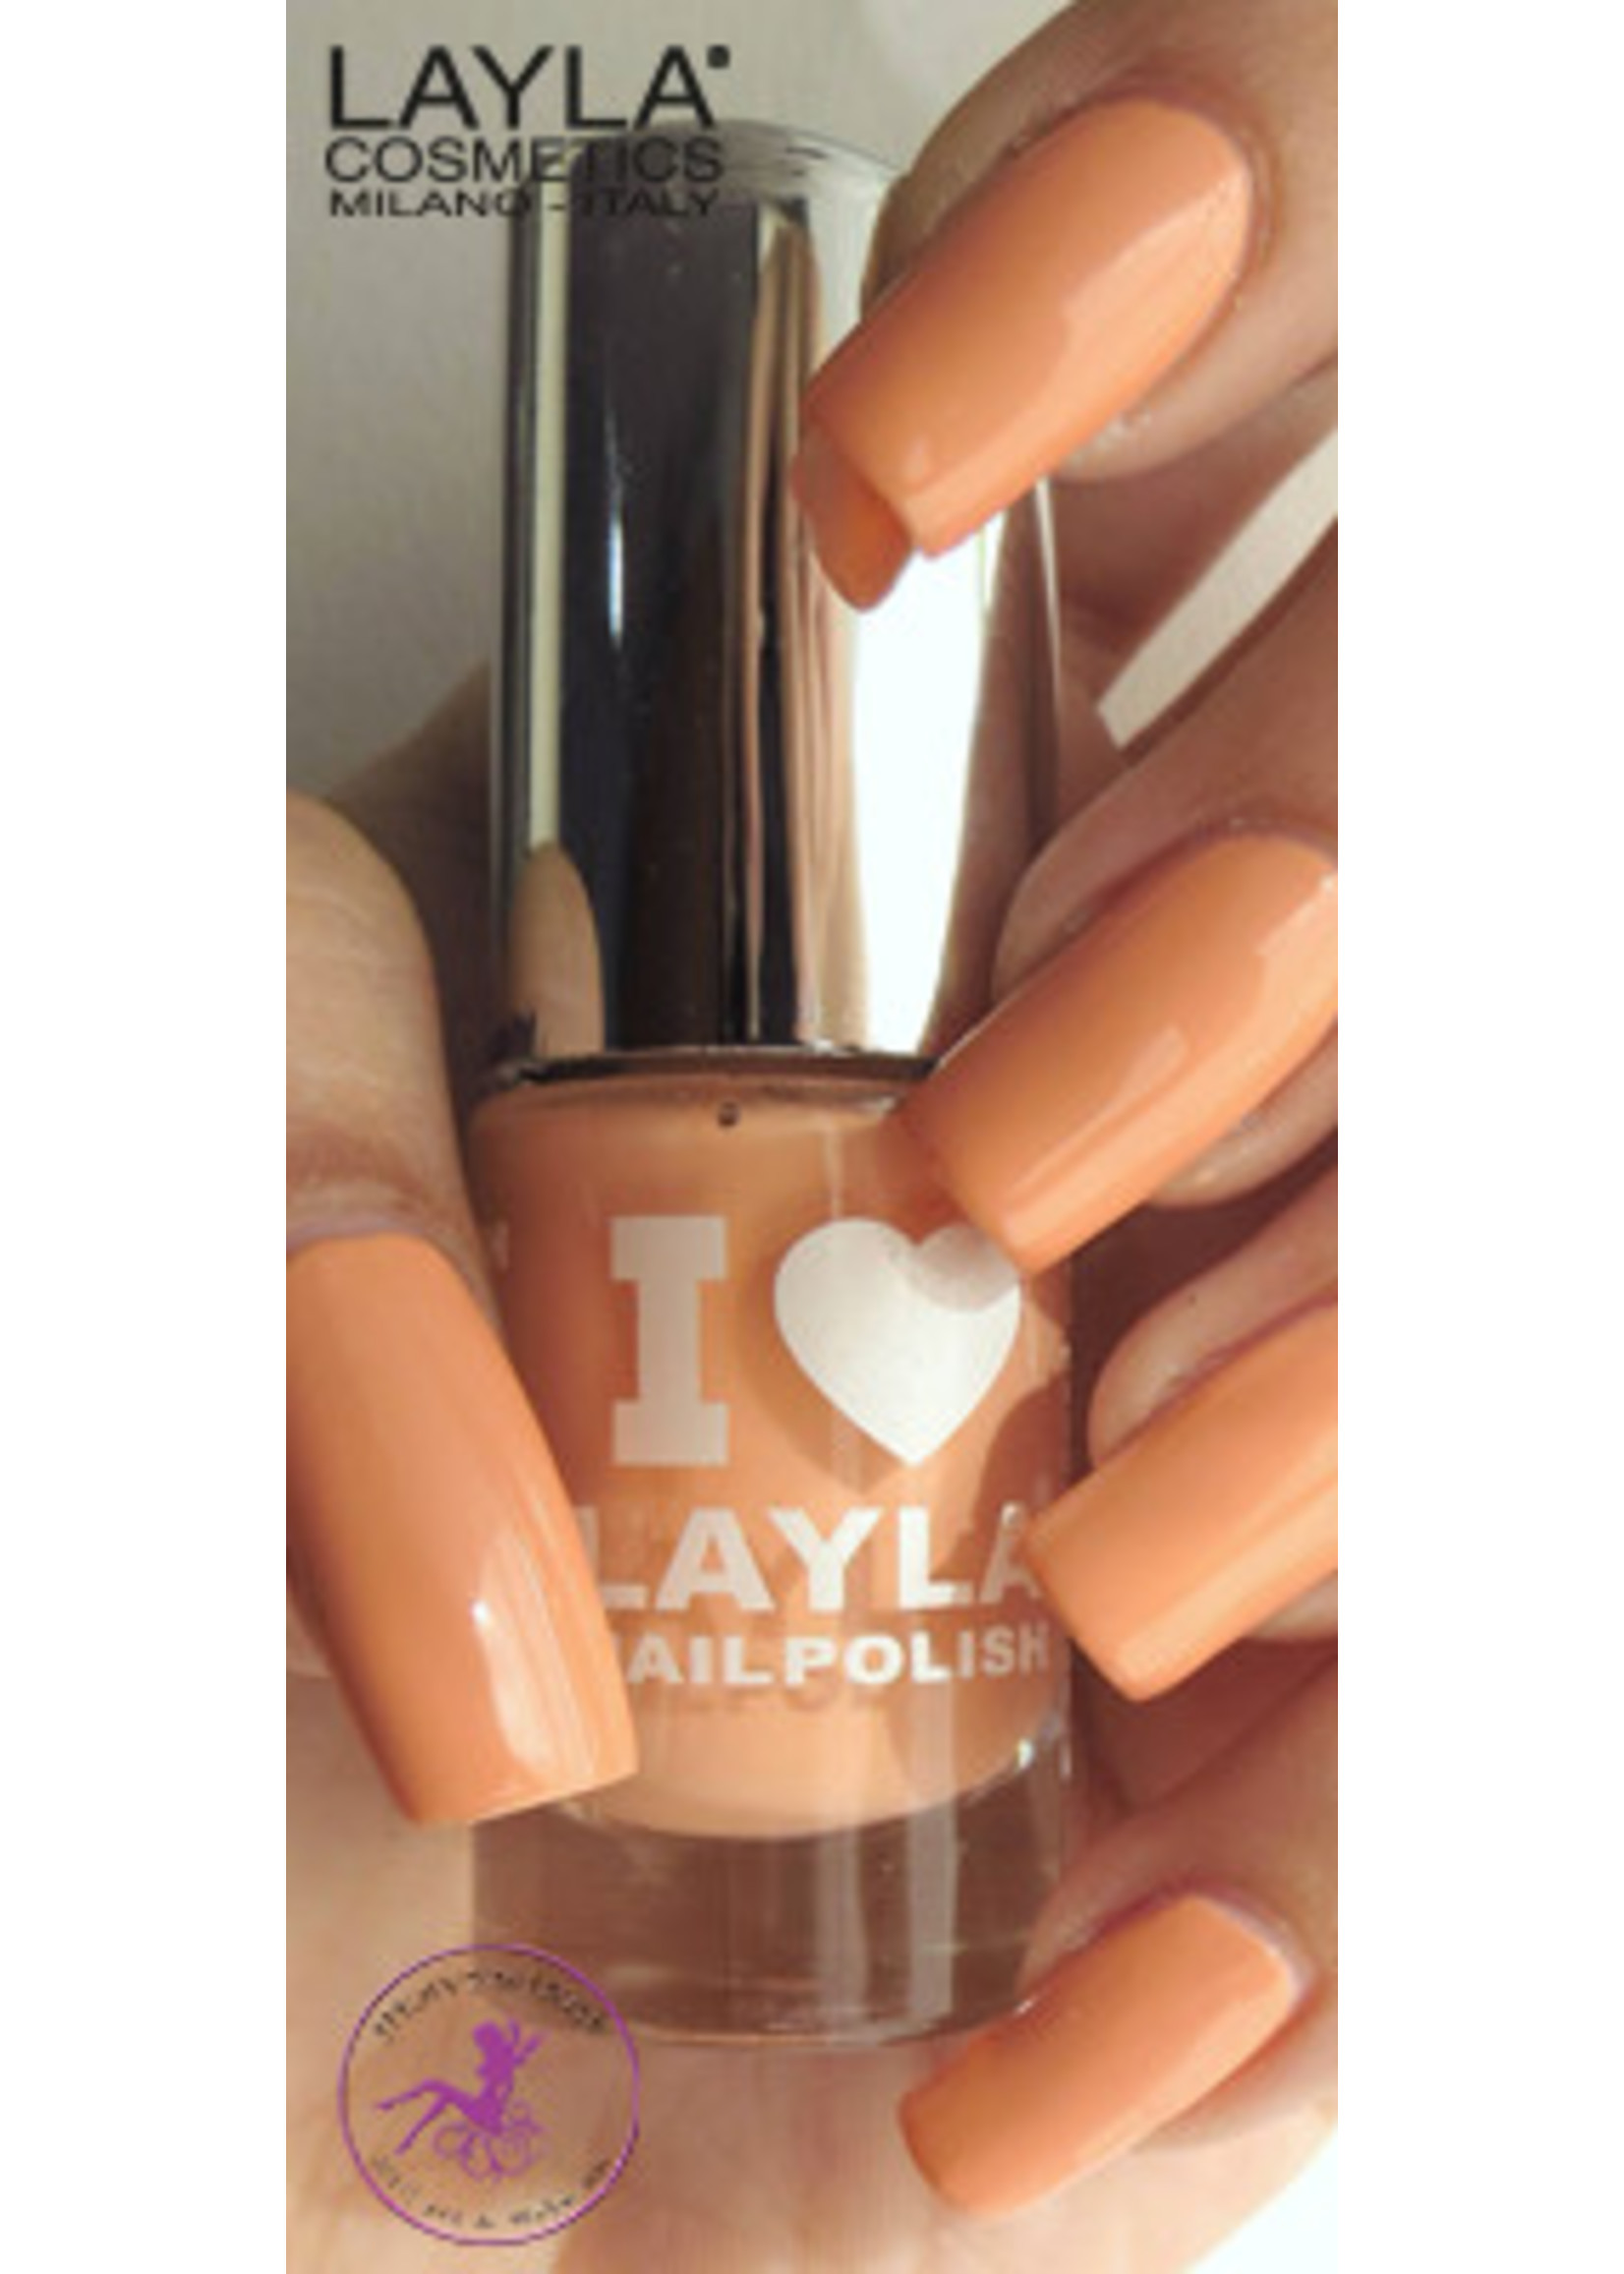 Layla Cosmetics Peachy Passion